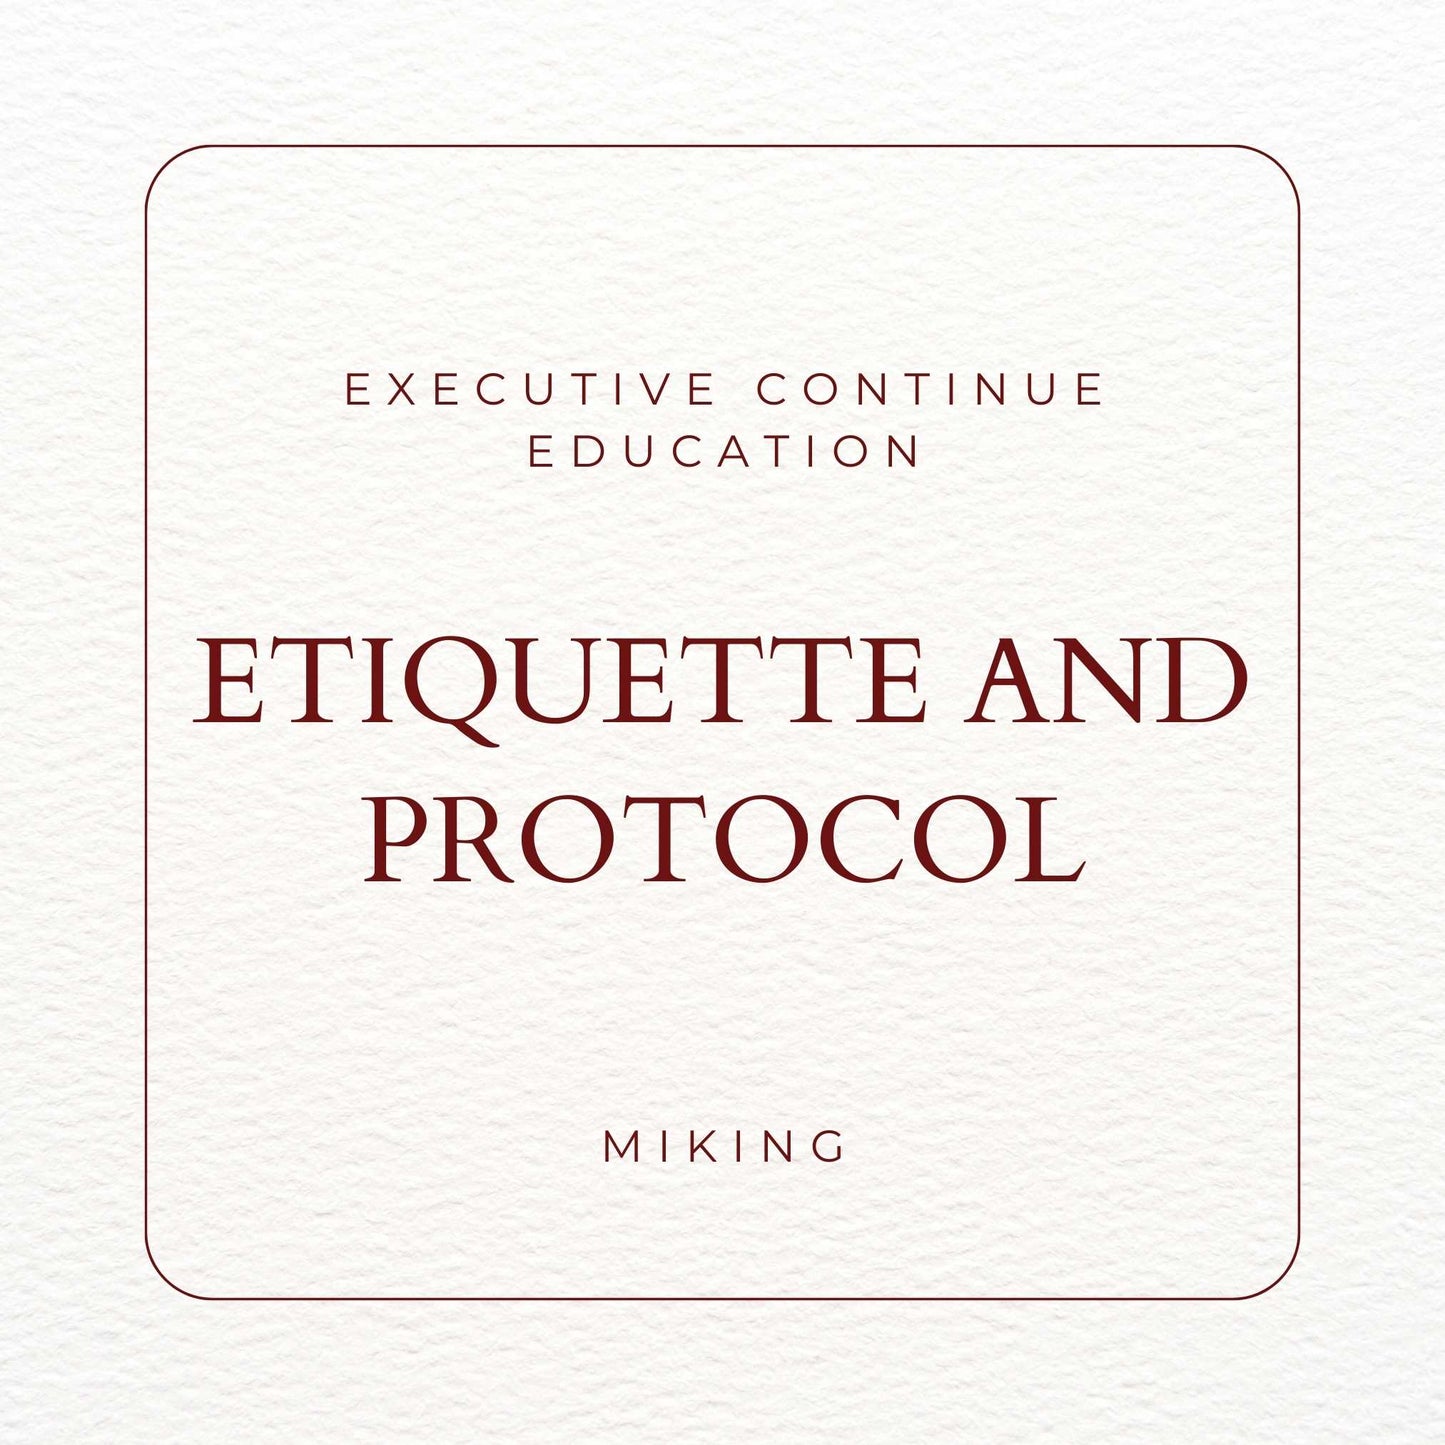 Executive Continue Education Etiquette and Protocol